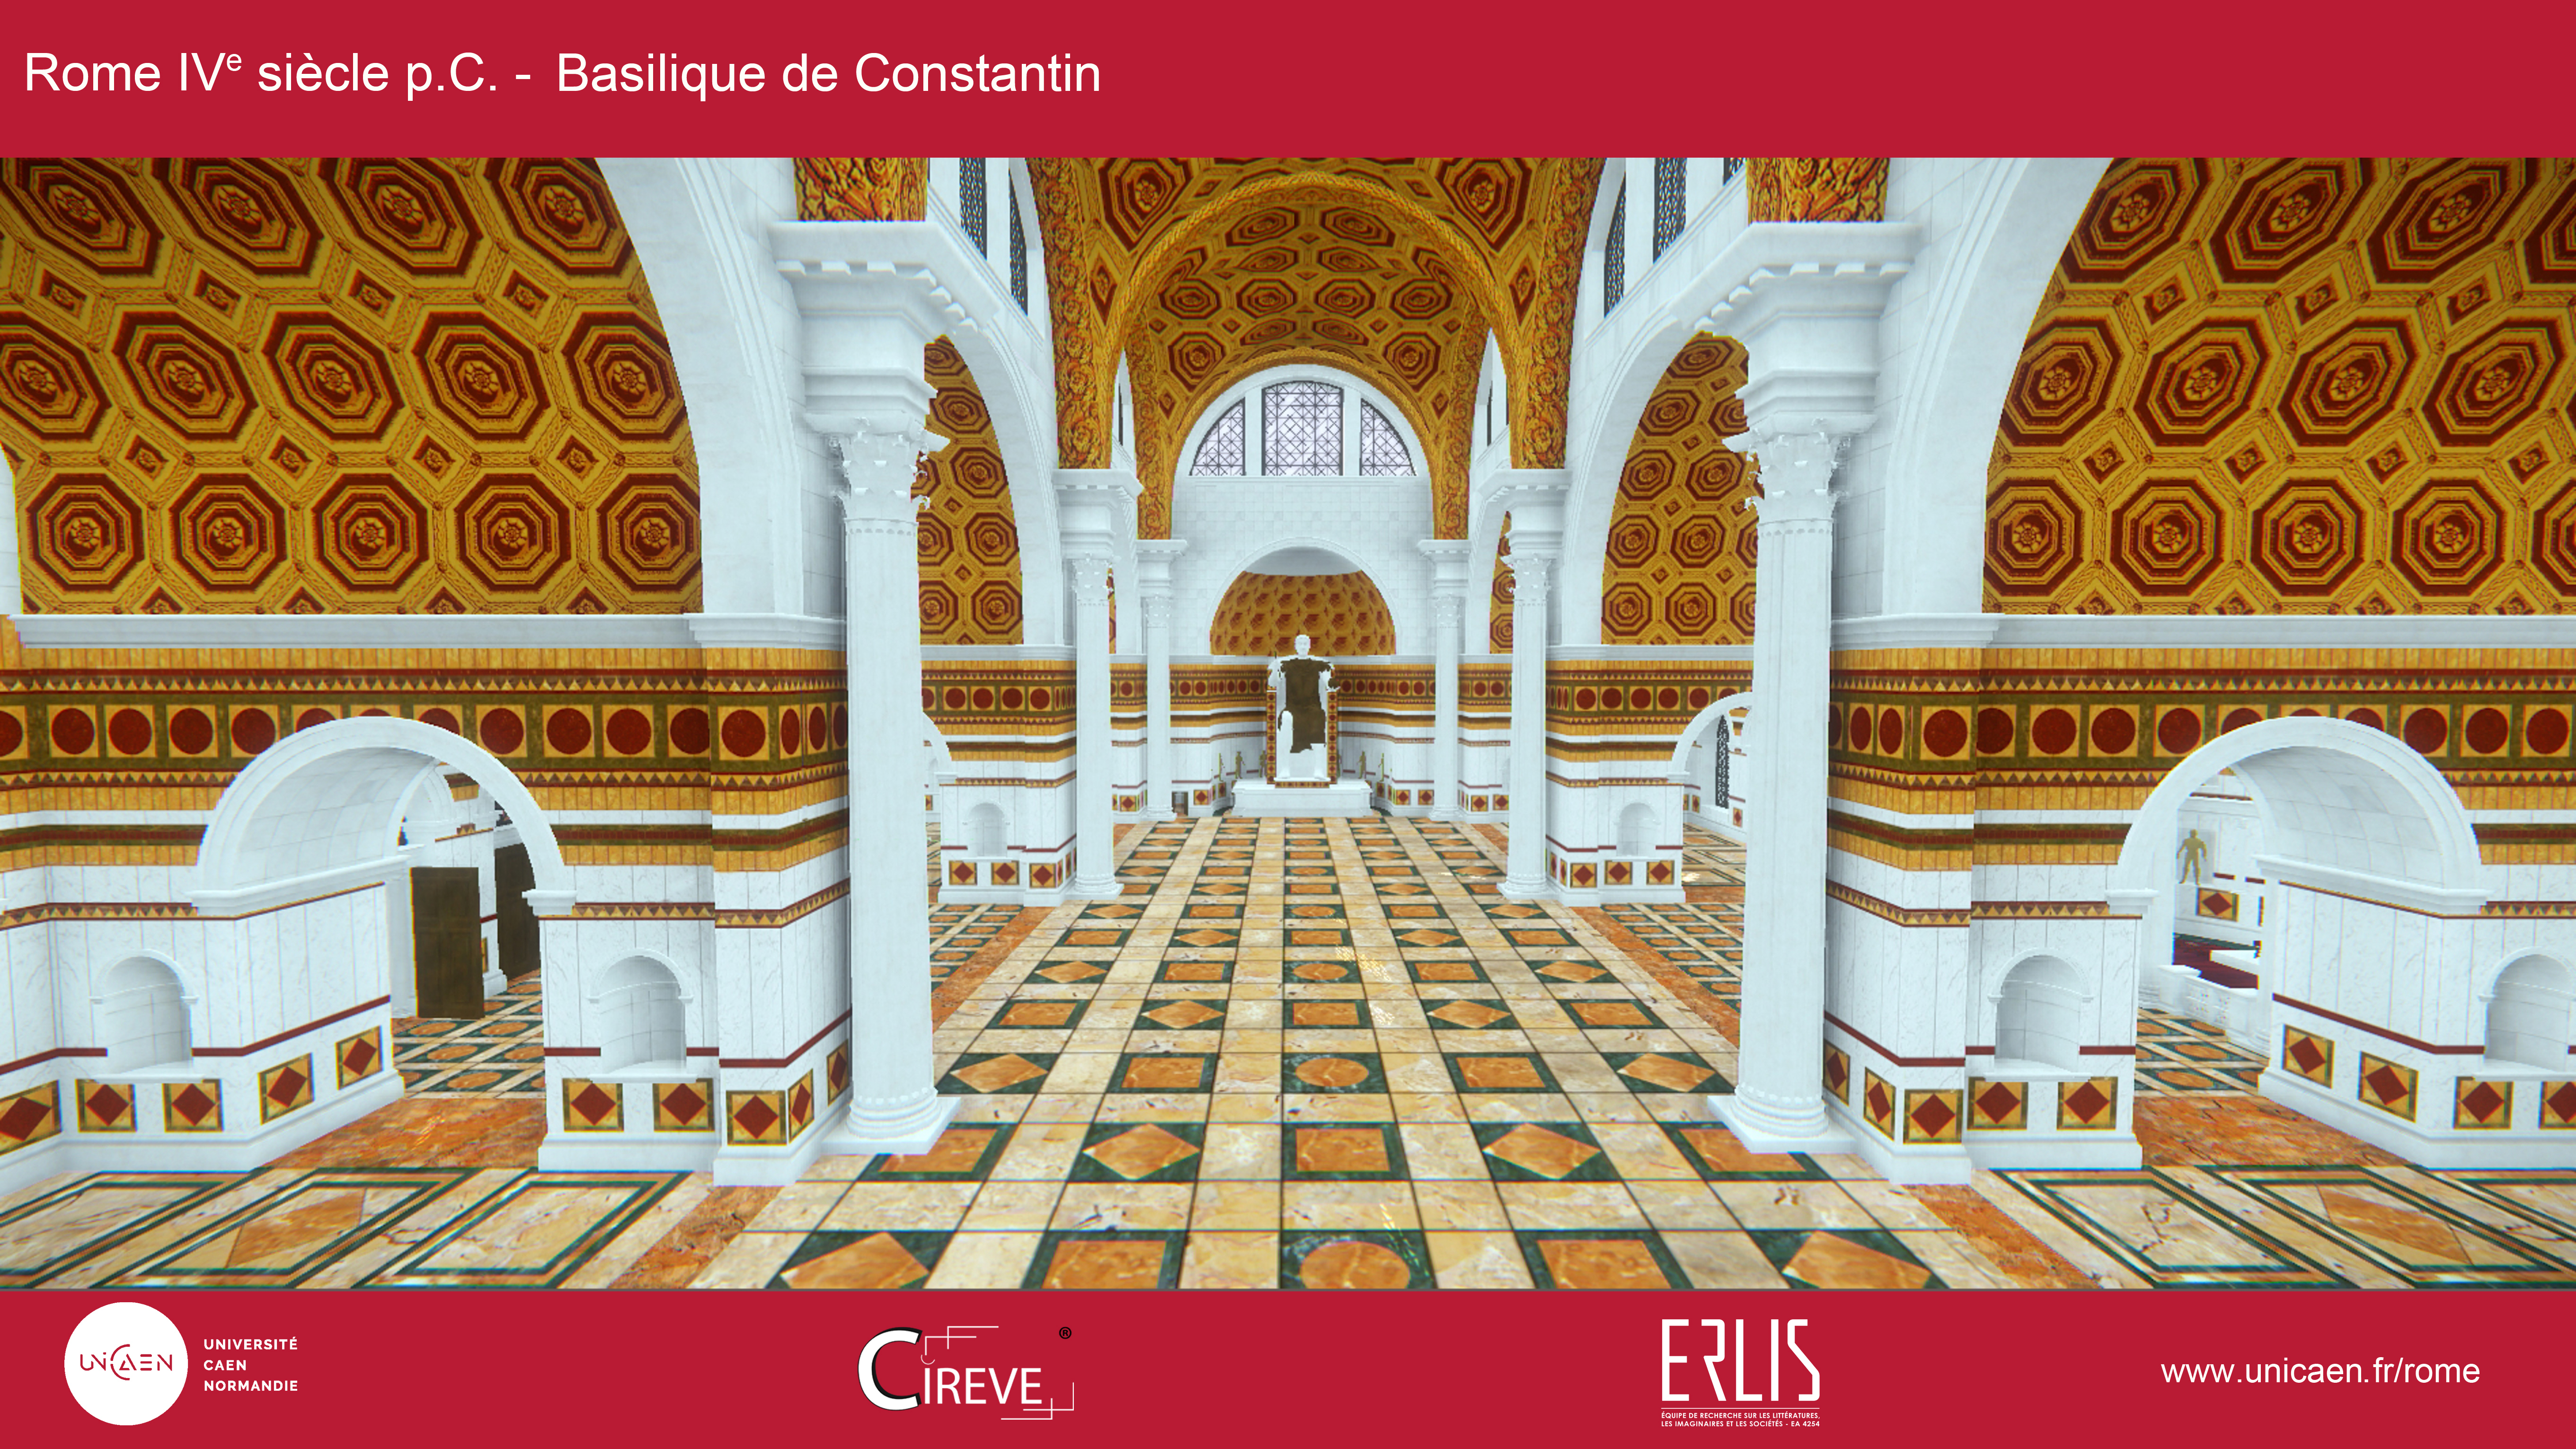 Basilique de Constantin